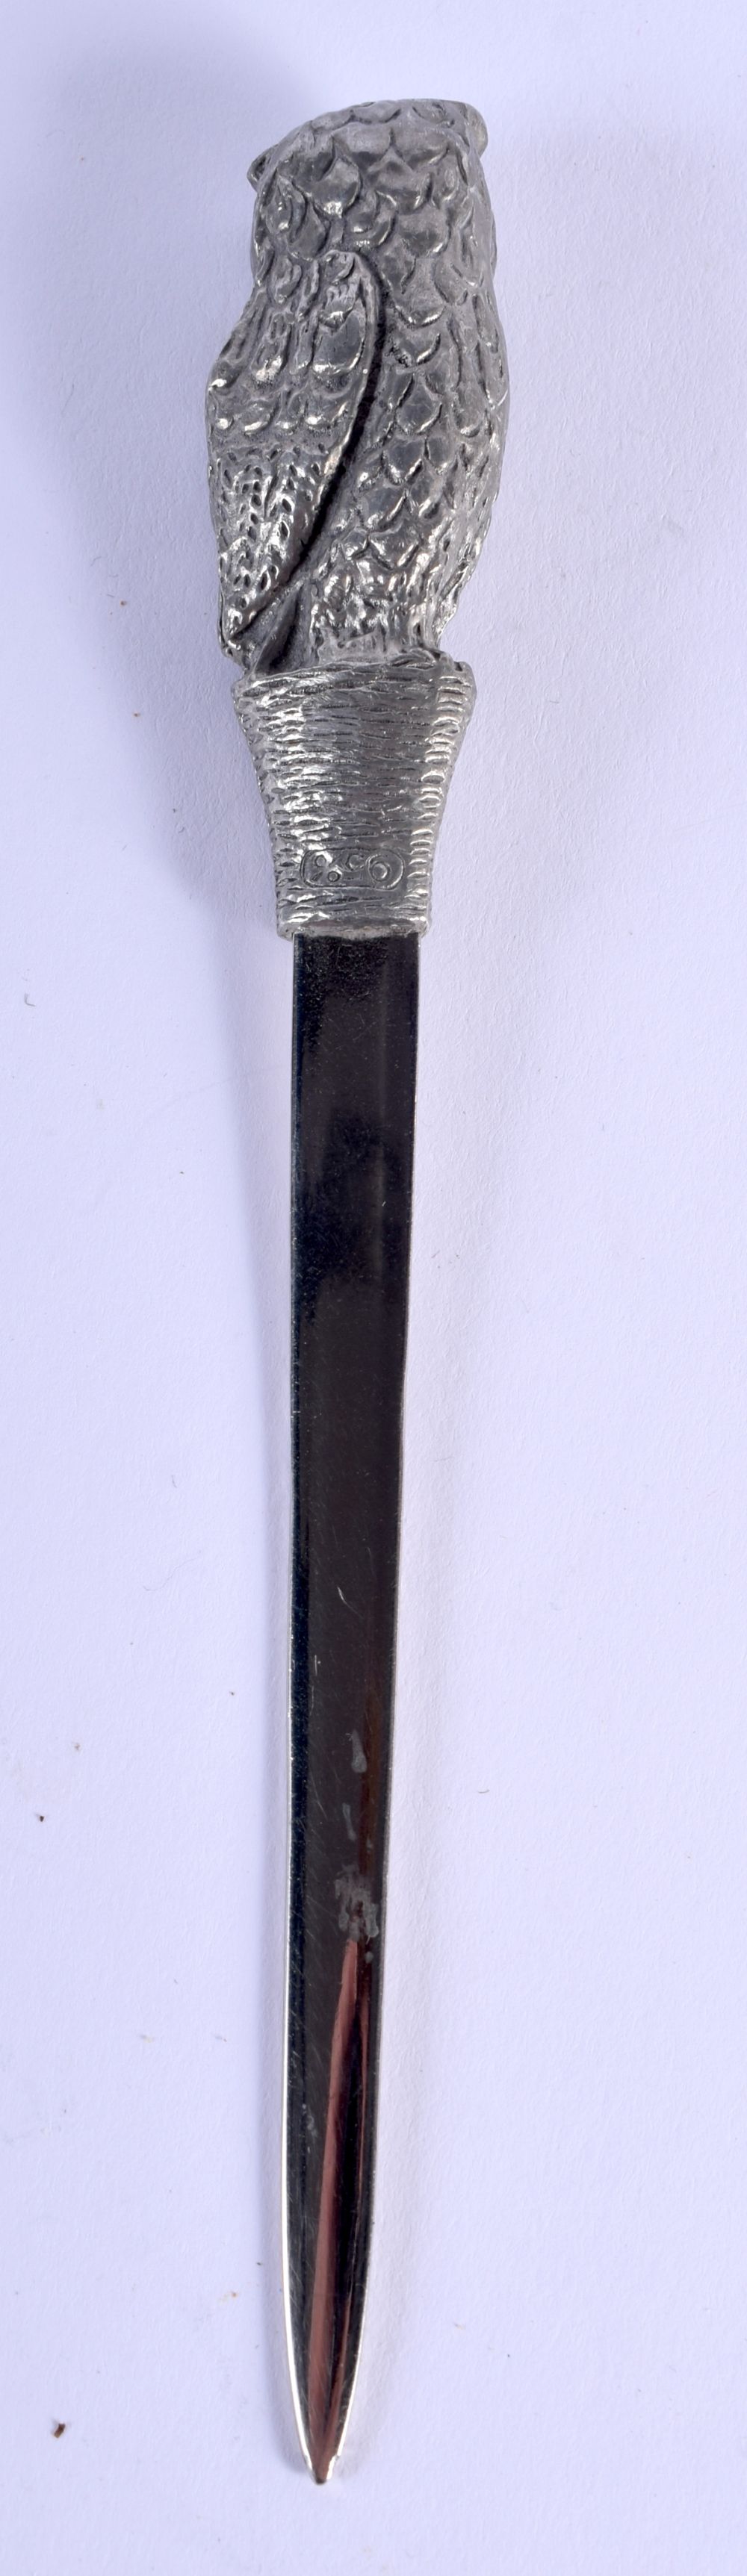 A CHARMING VINTAGE WHITE METAL OWL LETTER OPENER. 94 grams. 18 cm long. - Image 3 of 4